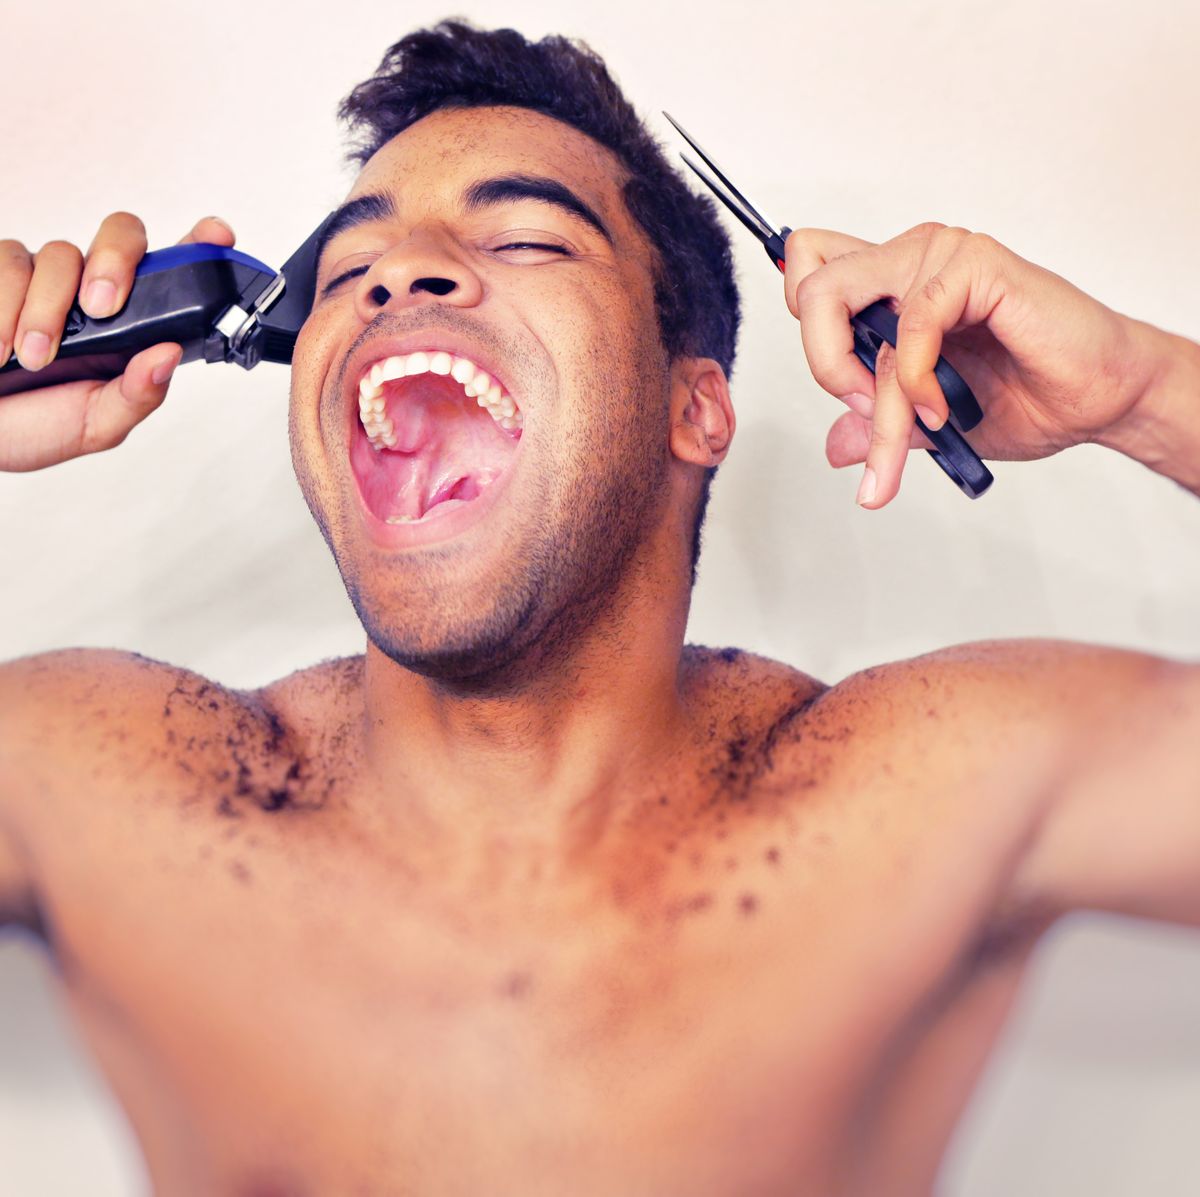 7 Tips to Cut Your Own Hair - Men's Self-Hair Cut Tips